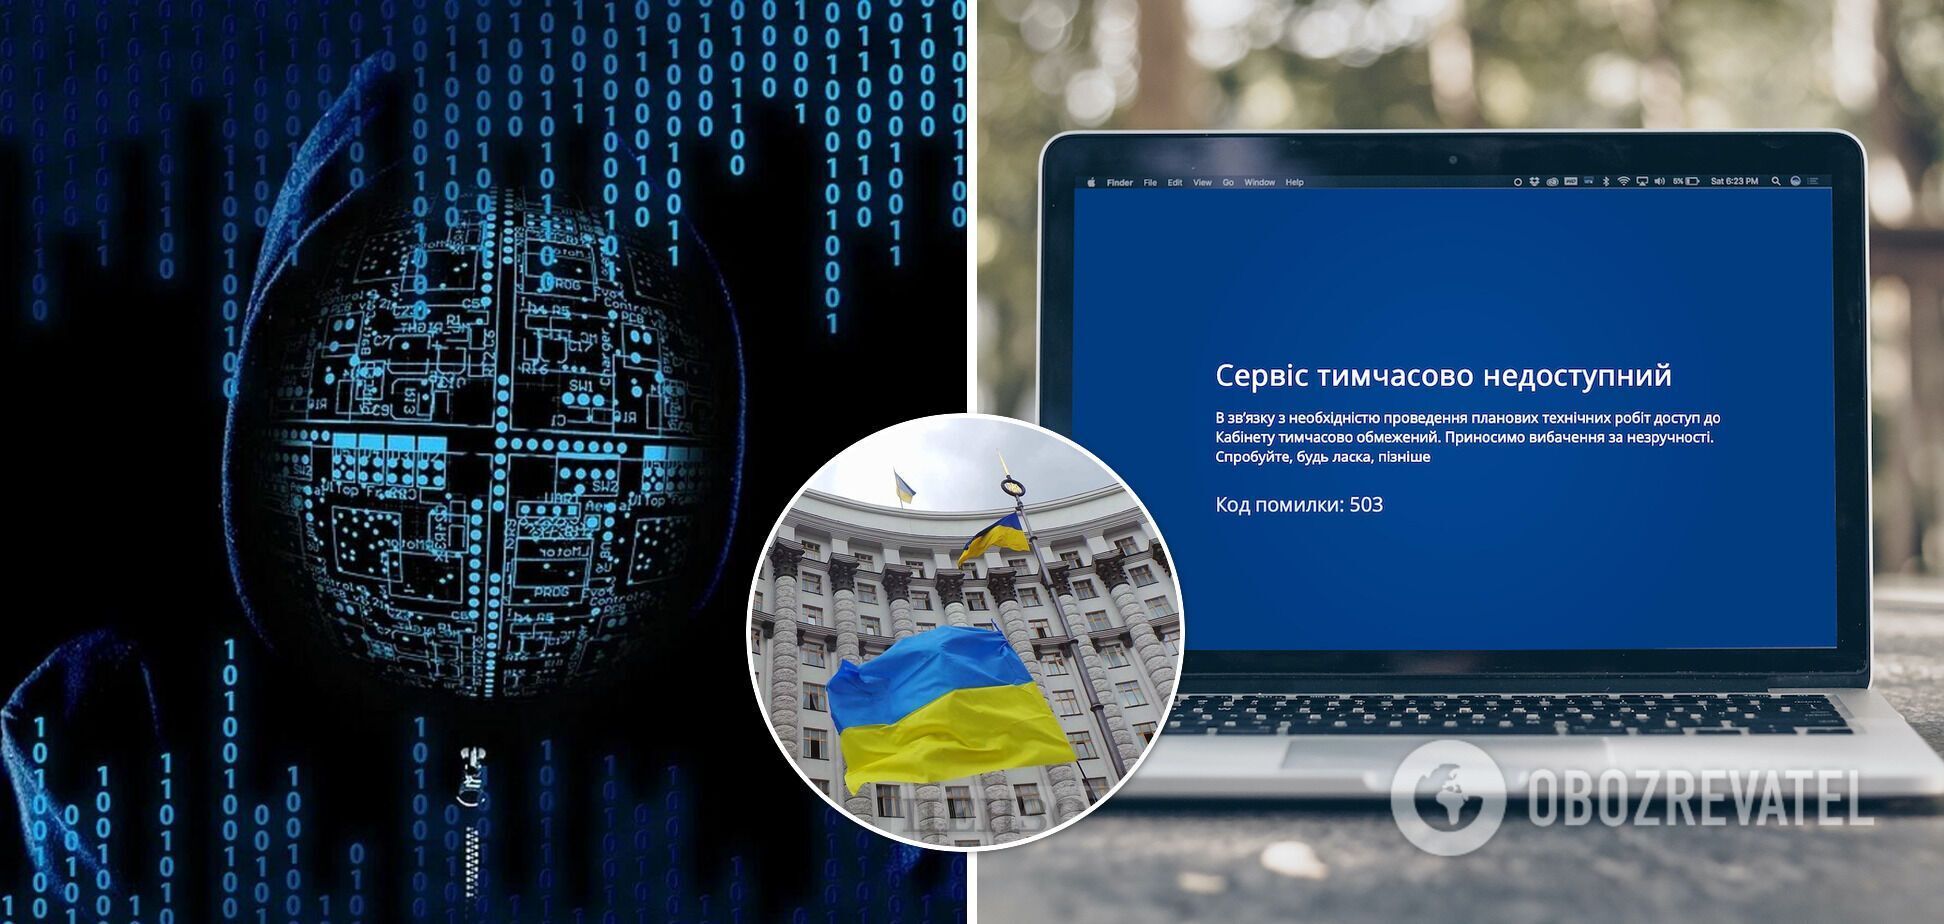 Кібератака зачепила понад 70 сайтів уряду України